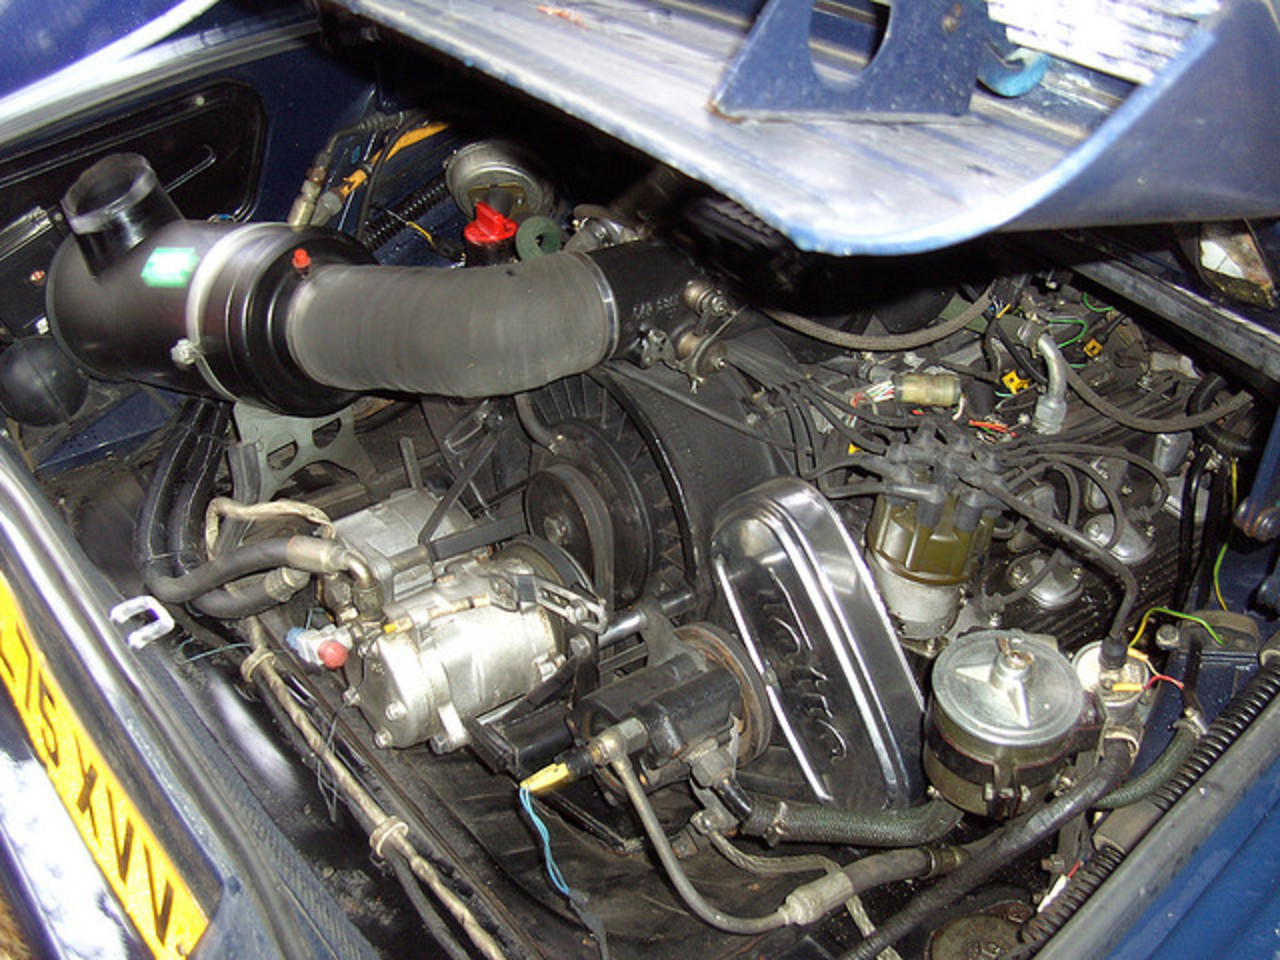 Tatra 613 V prototype, engine bay | Flickr - Photo Sharing!